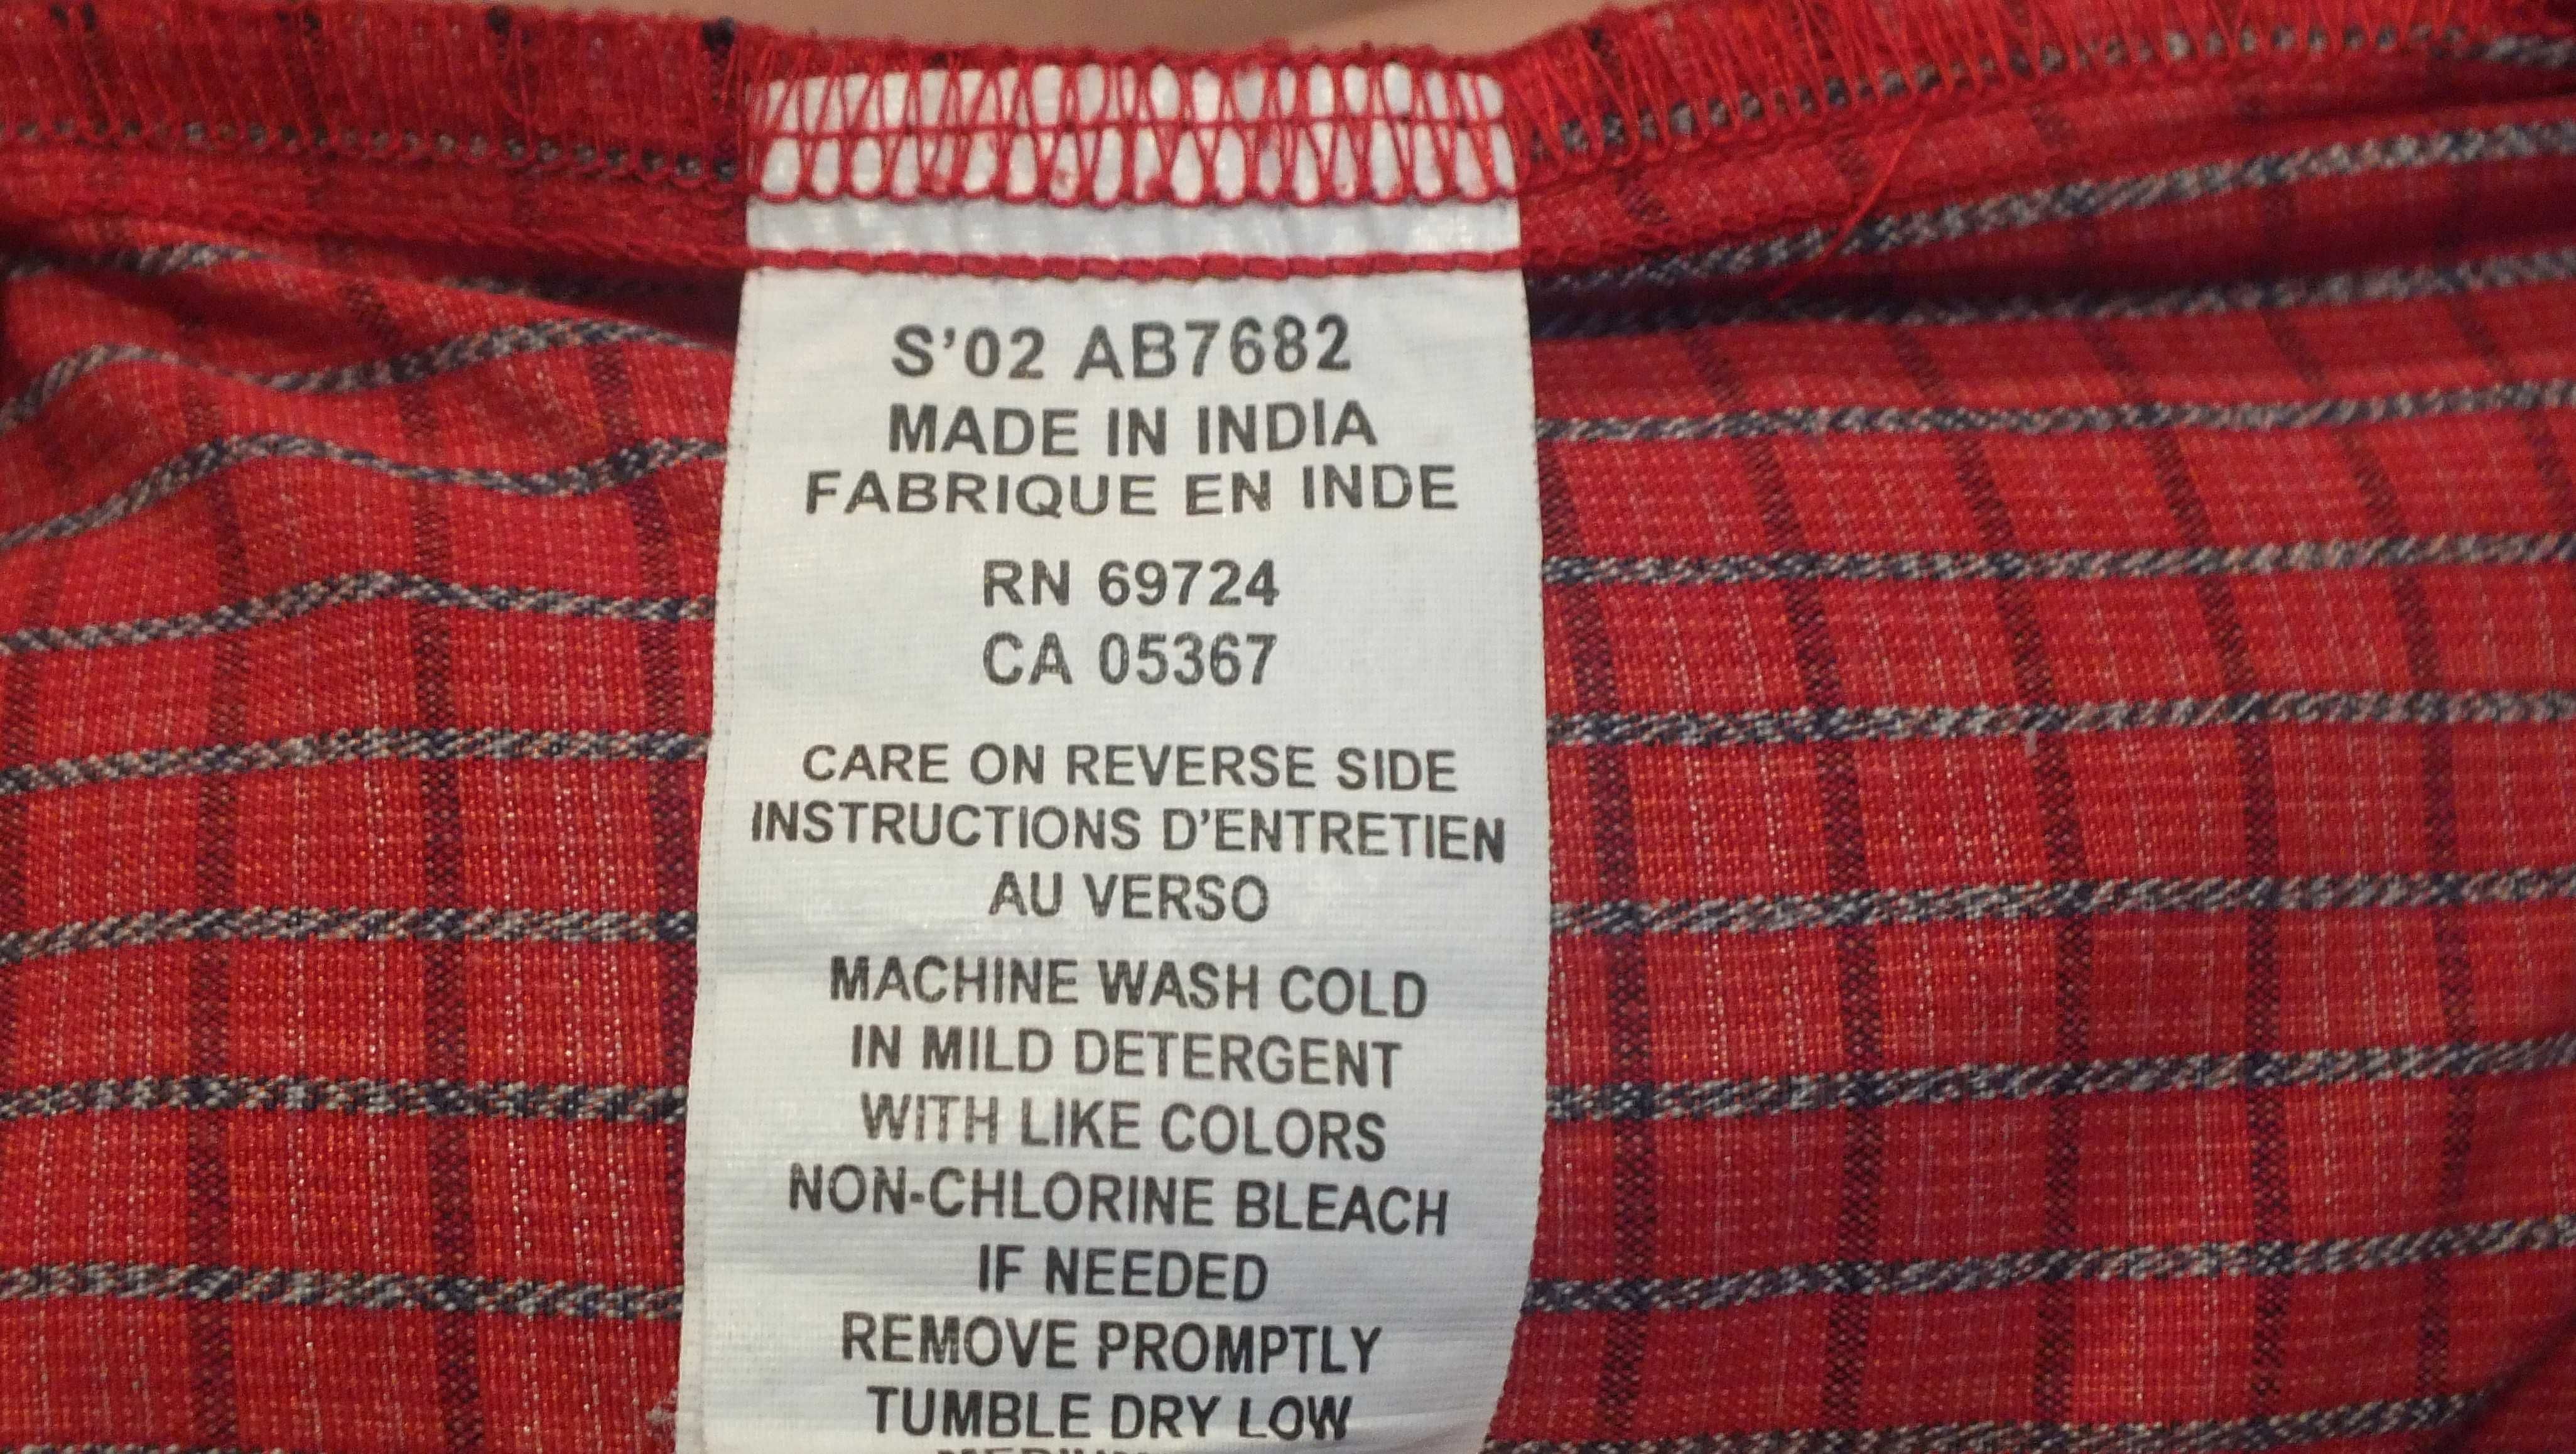 Рубашка Columbia Sportswear Company. Размер L (48)